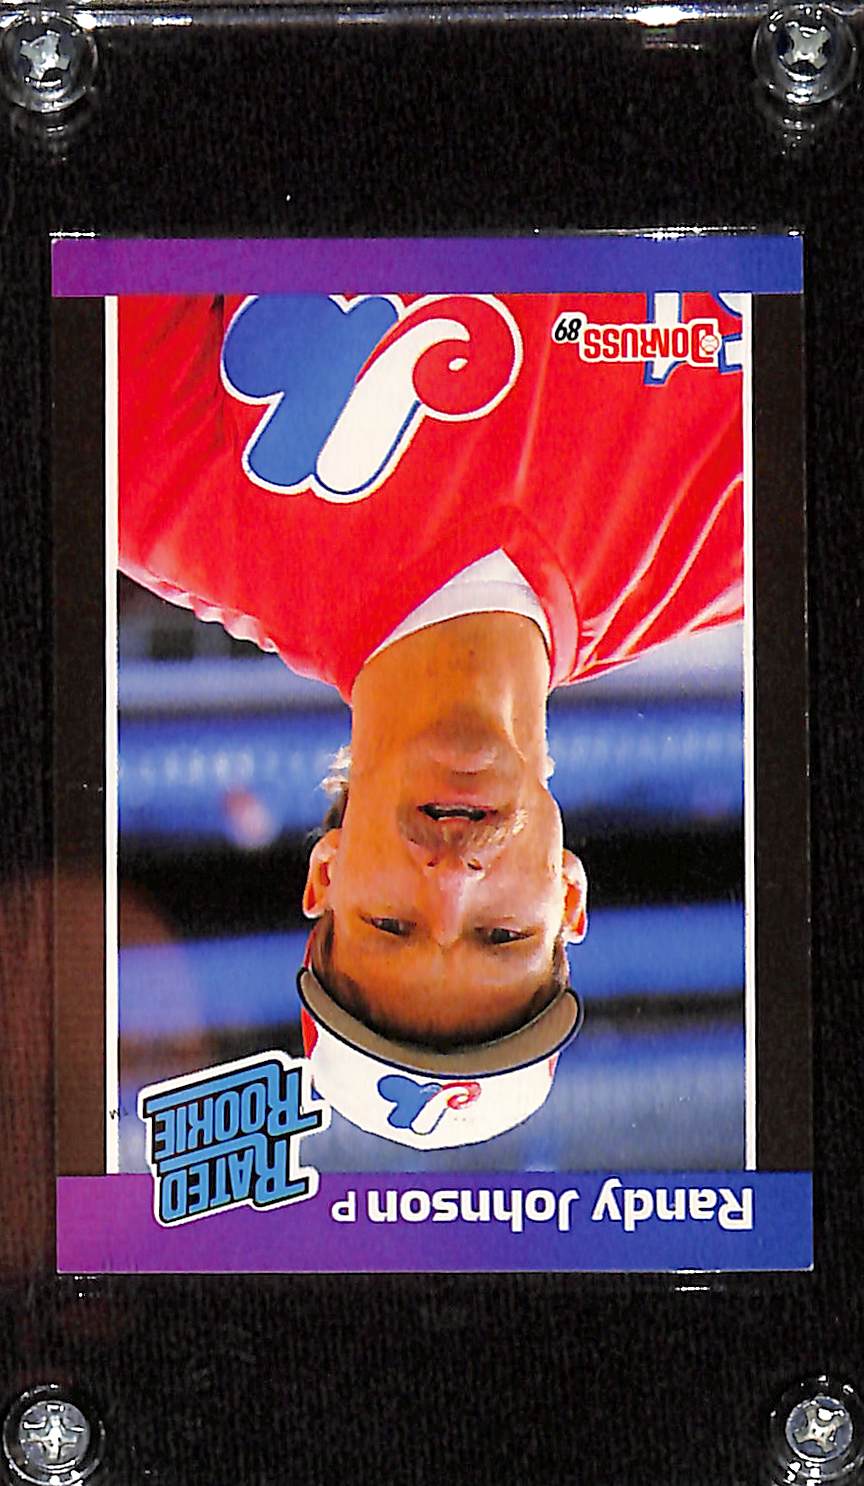 FIINR Baseball Card 1989 Donruss Rated Rookie Randy Johnson Baseball Card #42- 2 Errors Card  - Mint Condition